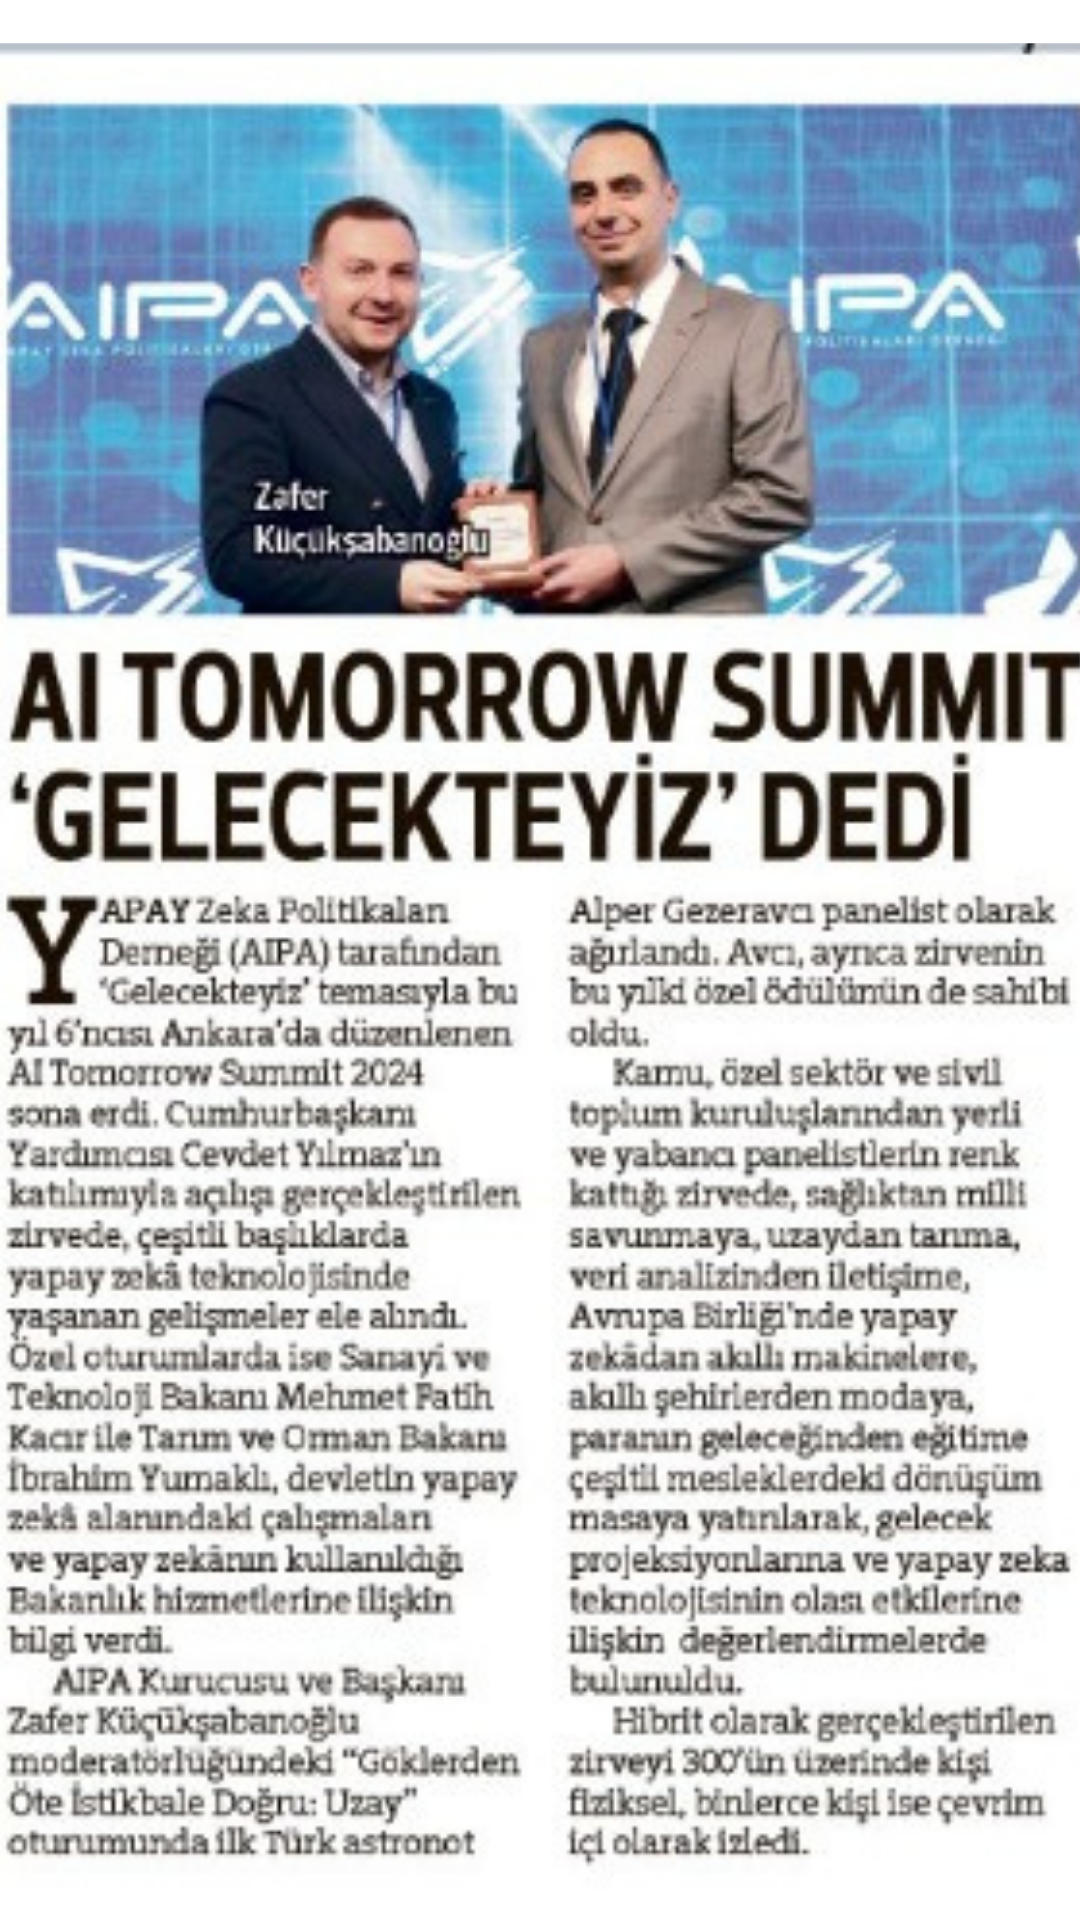 AI Tomorrow Summit 